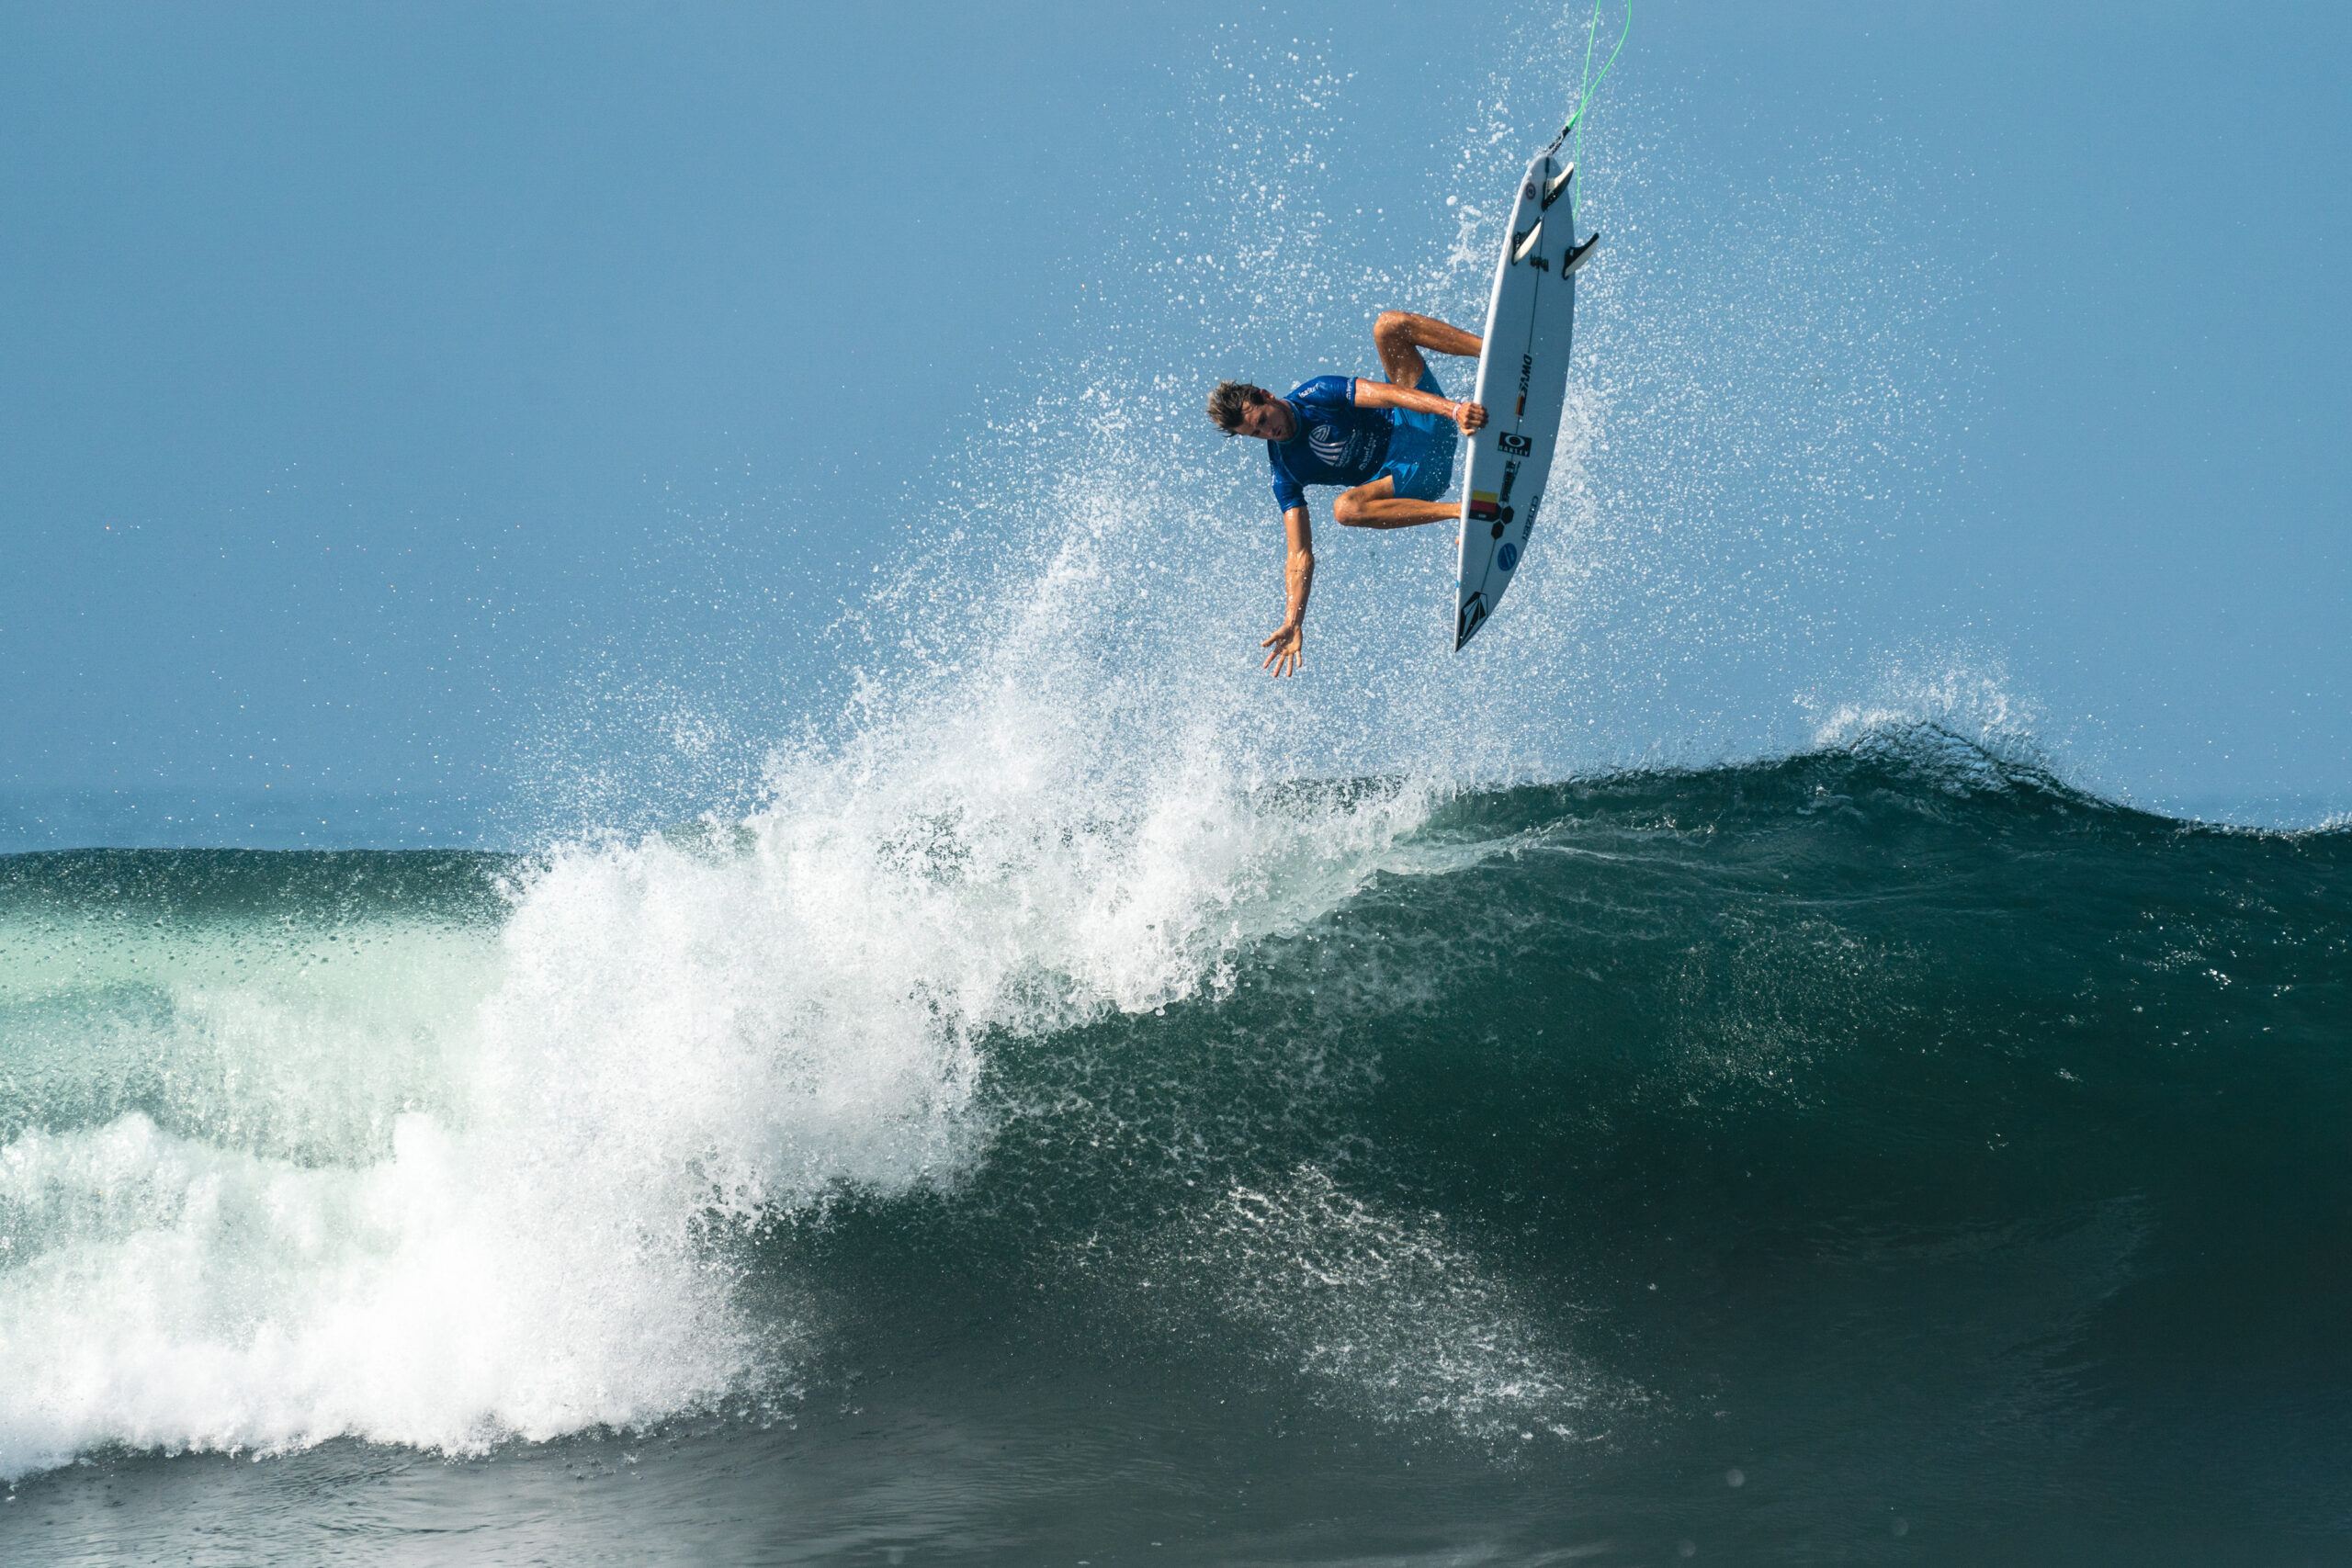 Surf City El Salvador: world-class surfers ride waves to raise awareness on  ocean warming